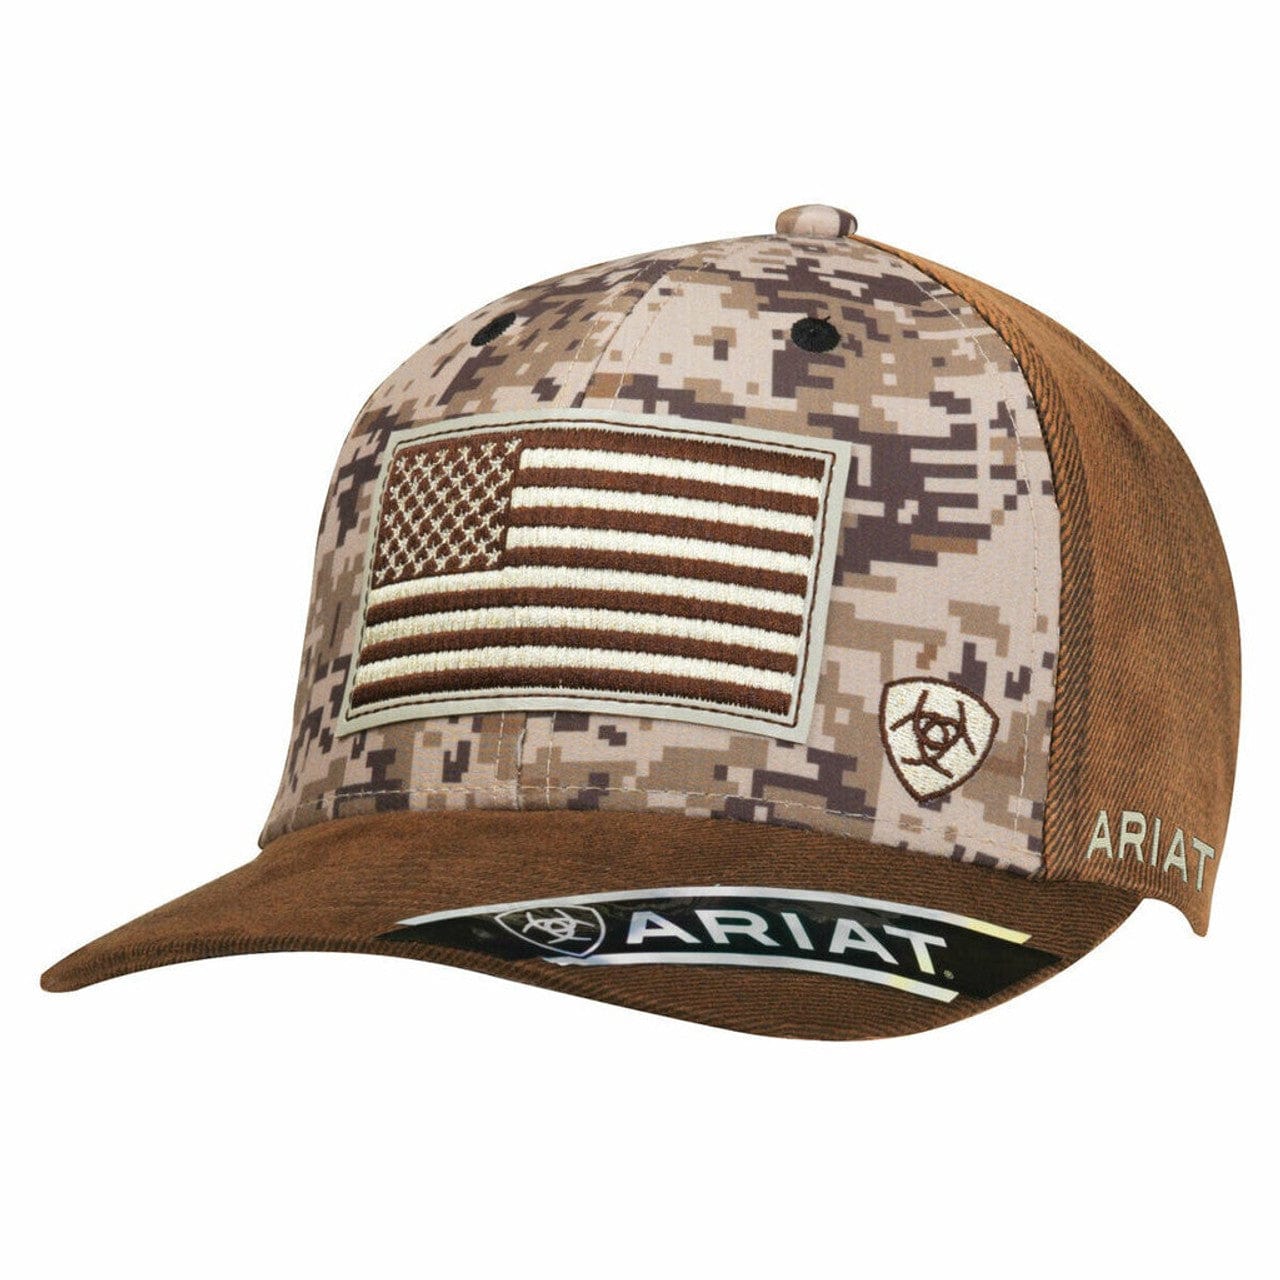 M&F WESTERN Hats Ariat Men's Brown Digital Camo Snapback Patch Ball Cap 15094156